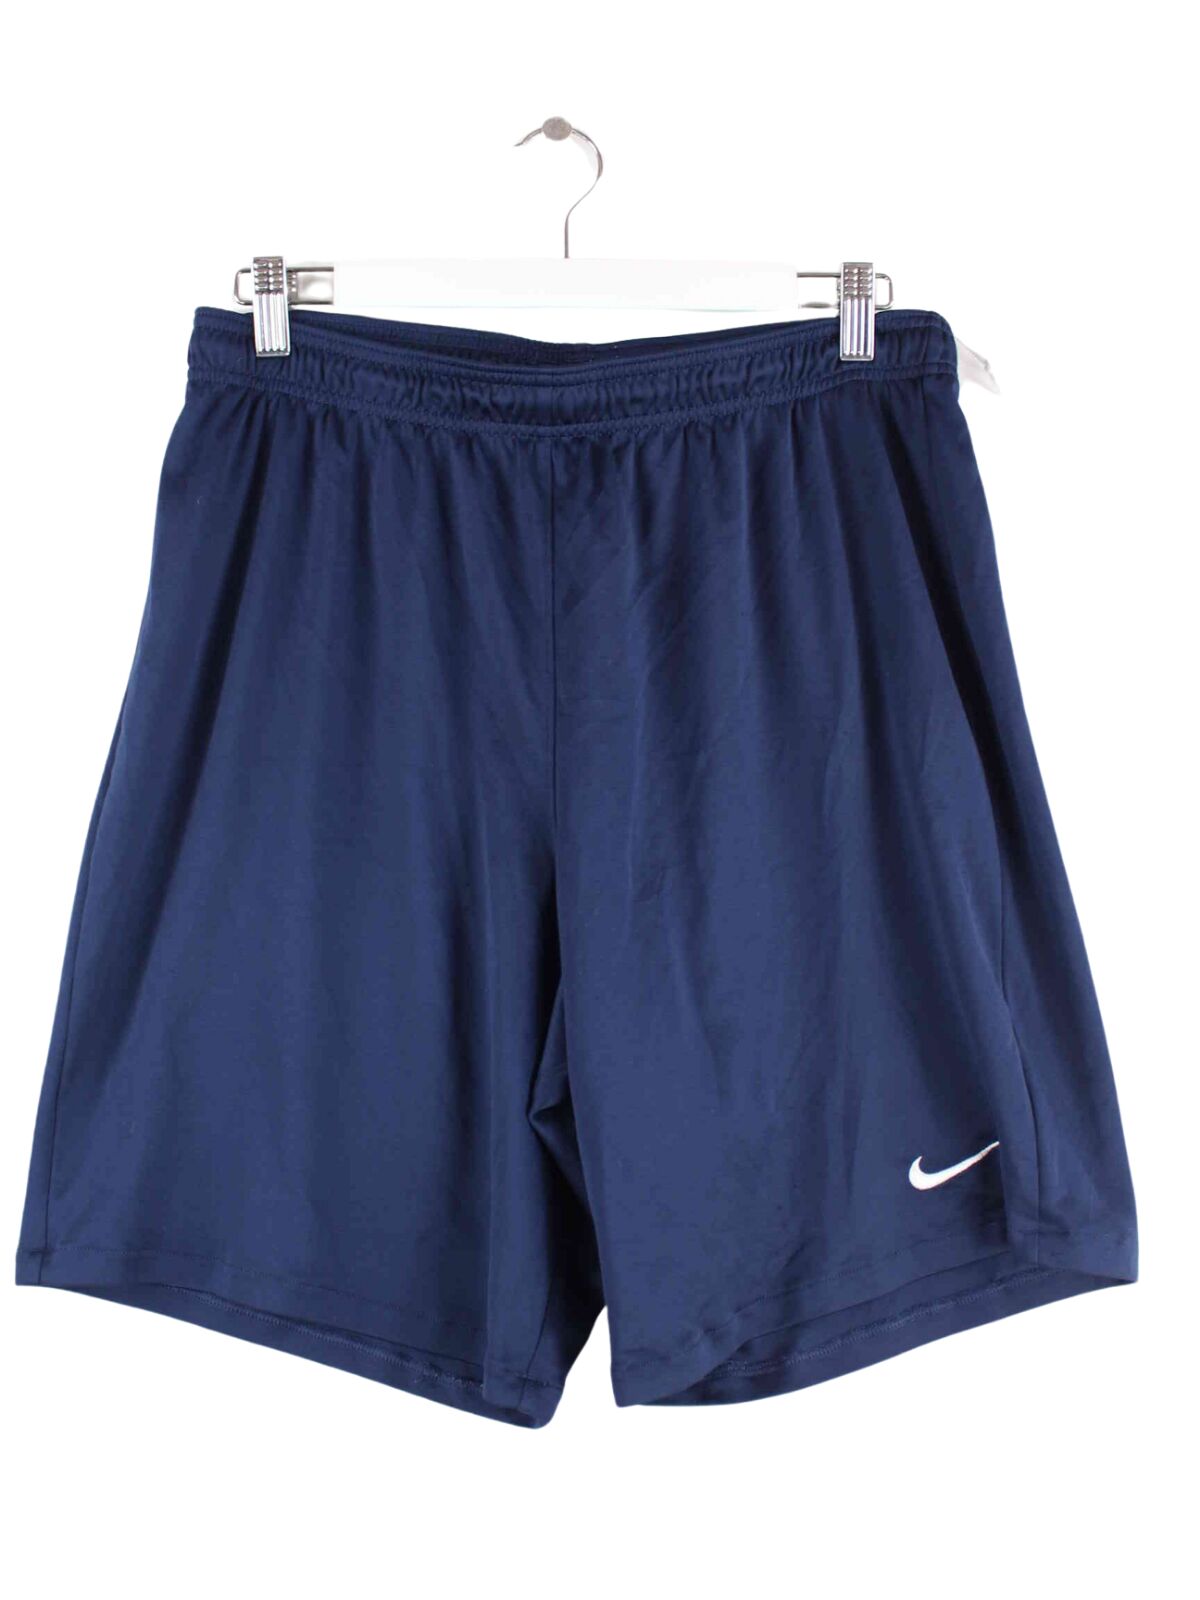 Nike Swoosh Shorts Blau L (front image)